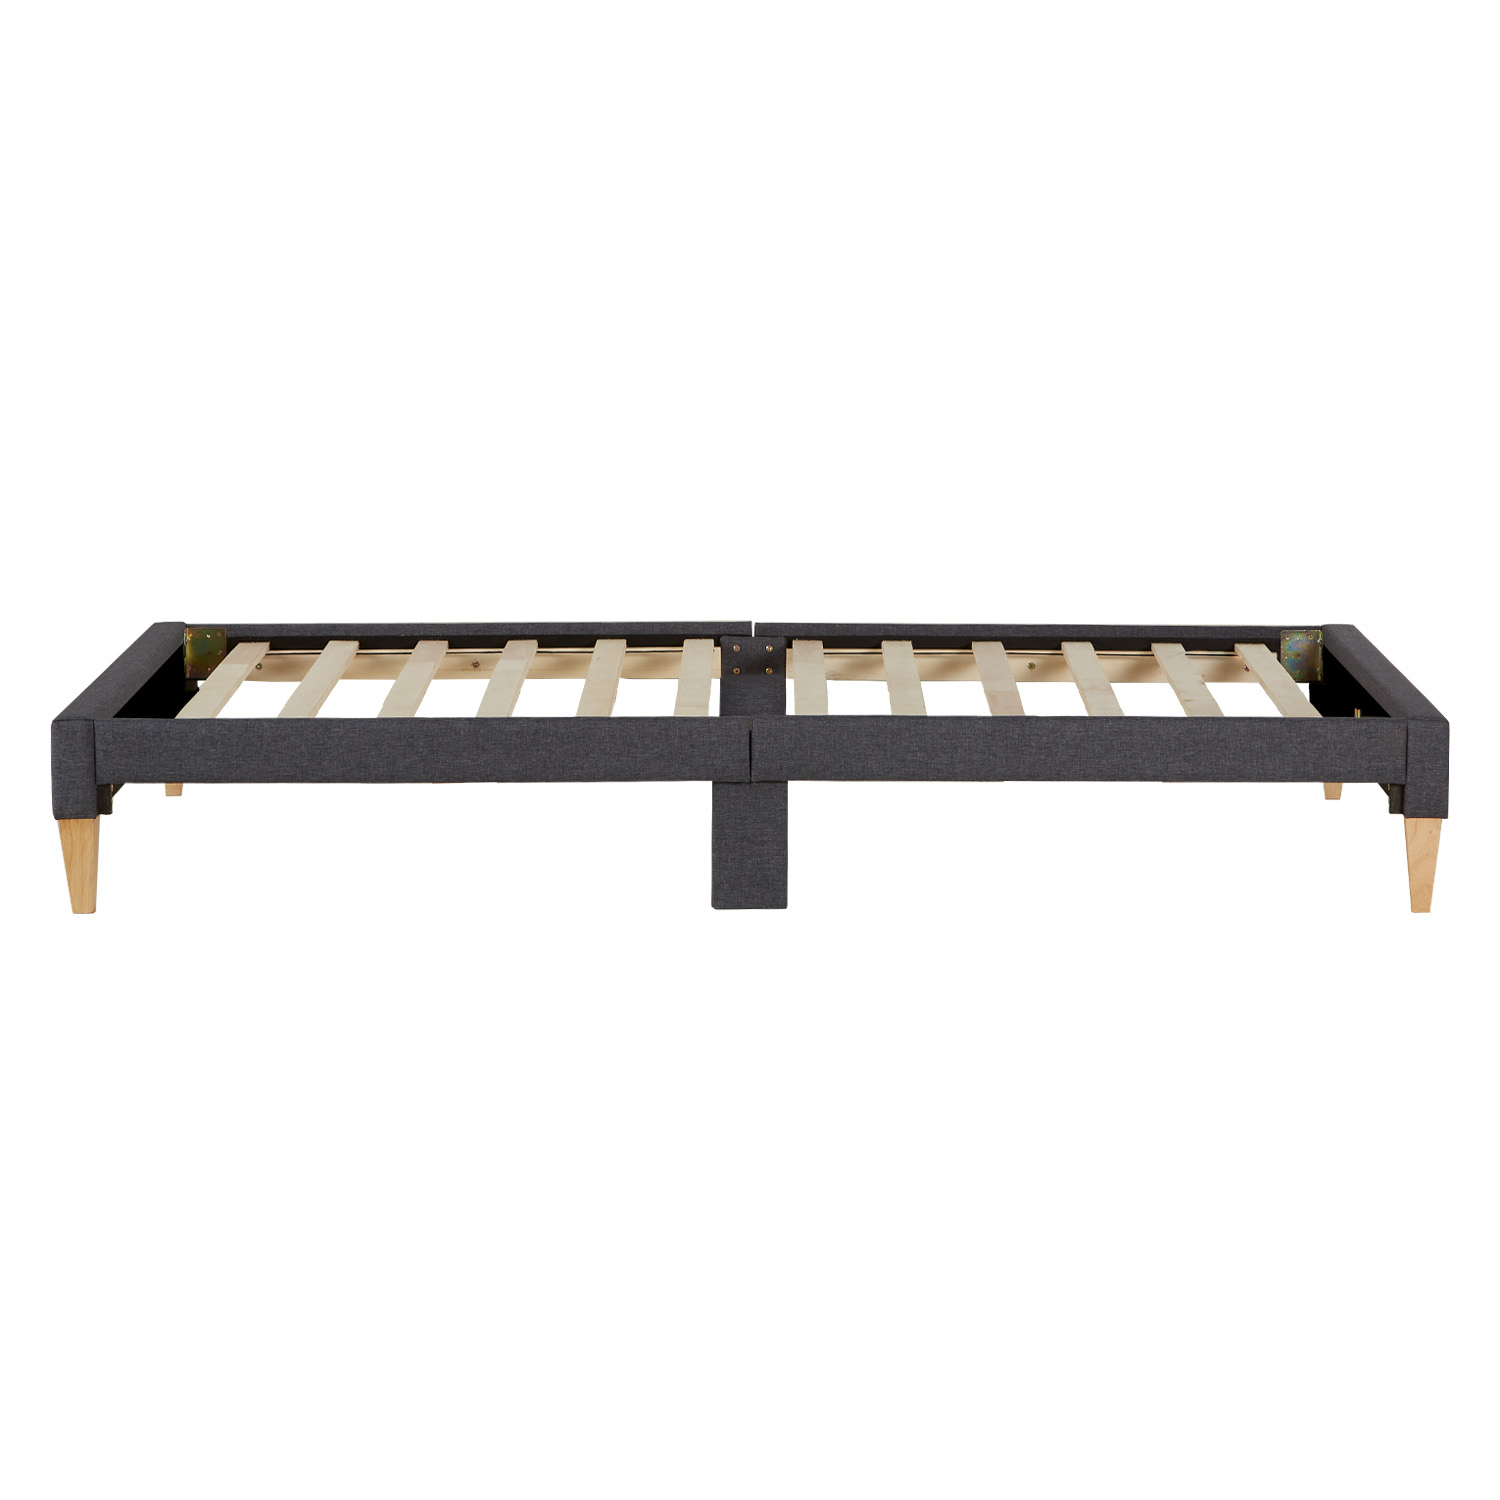 Upholstered Bed 90x200 cm with Slatts Grey Fabric Bed Single Bed Futon Bed Frame Platform Bed